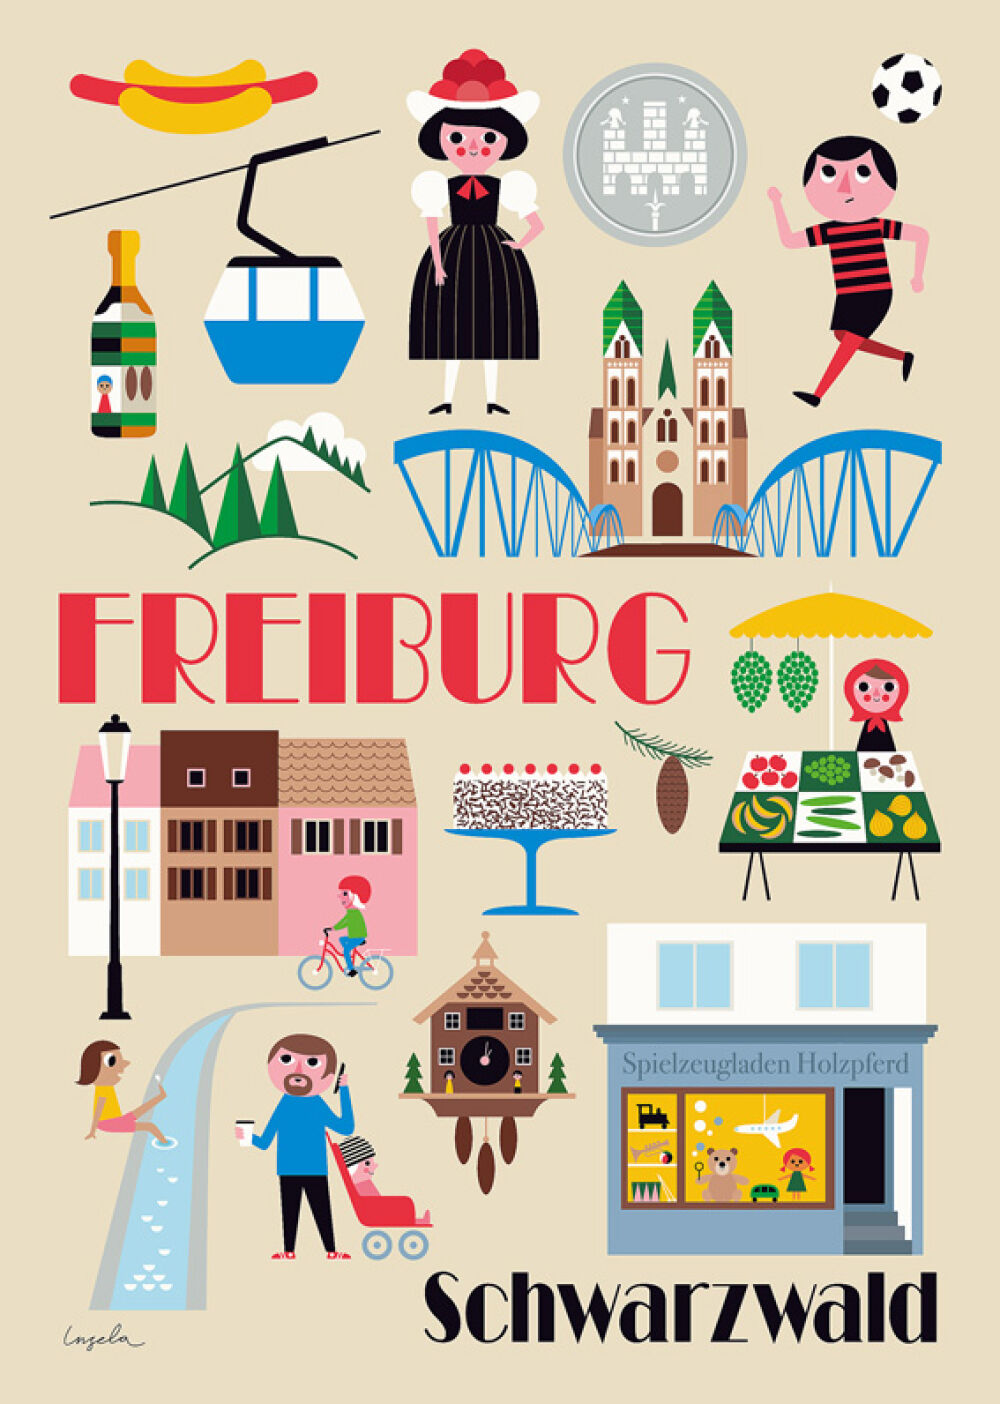 Poster design, vector drawings by illustrator Ingela P Arrhenius.